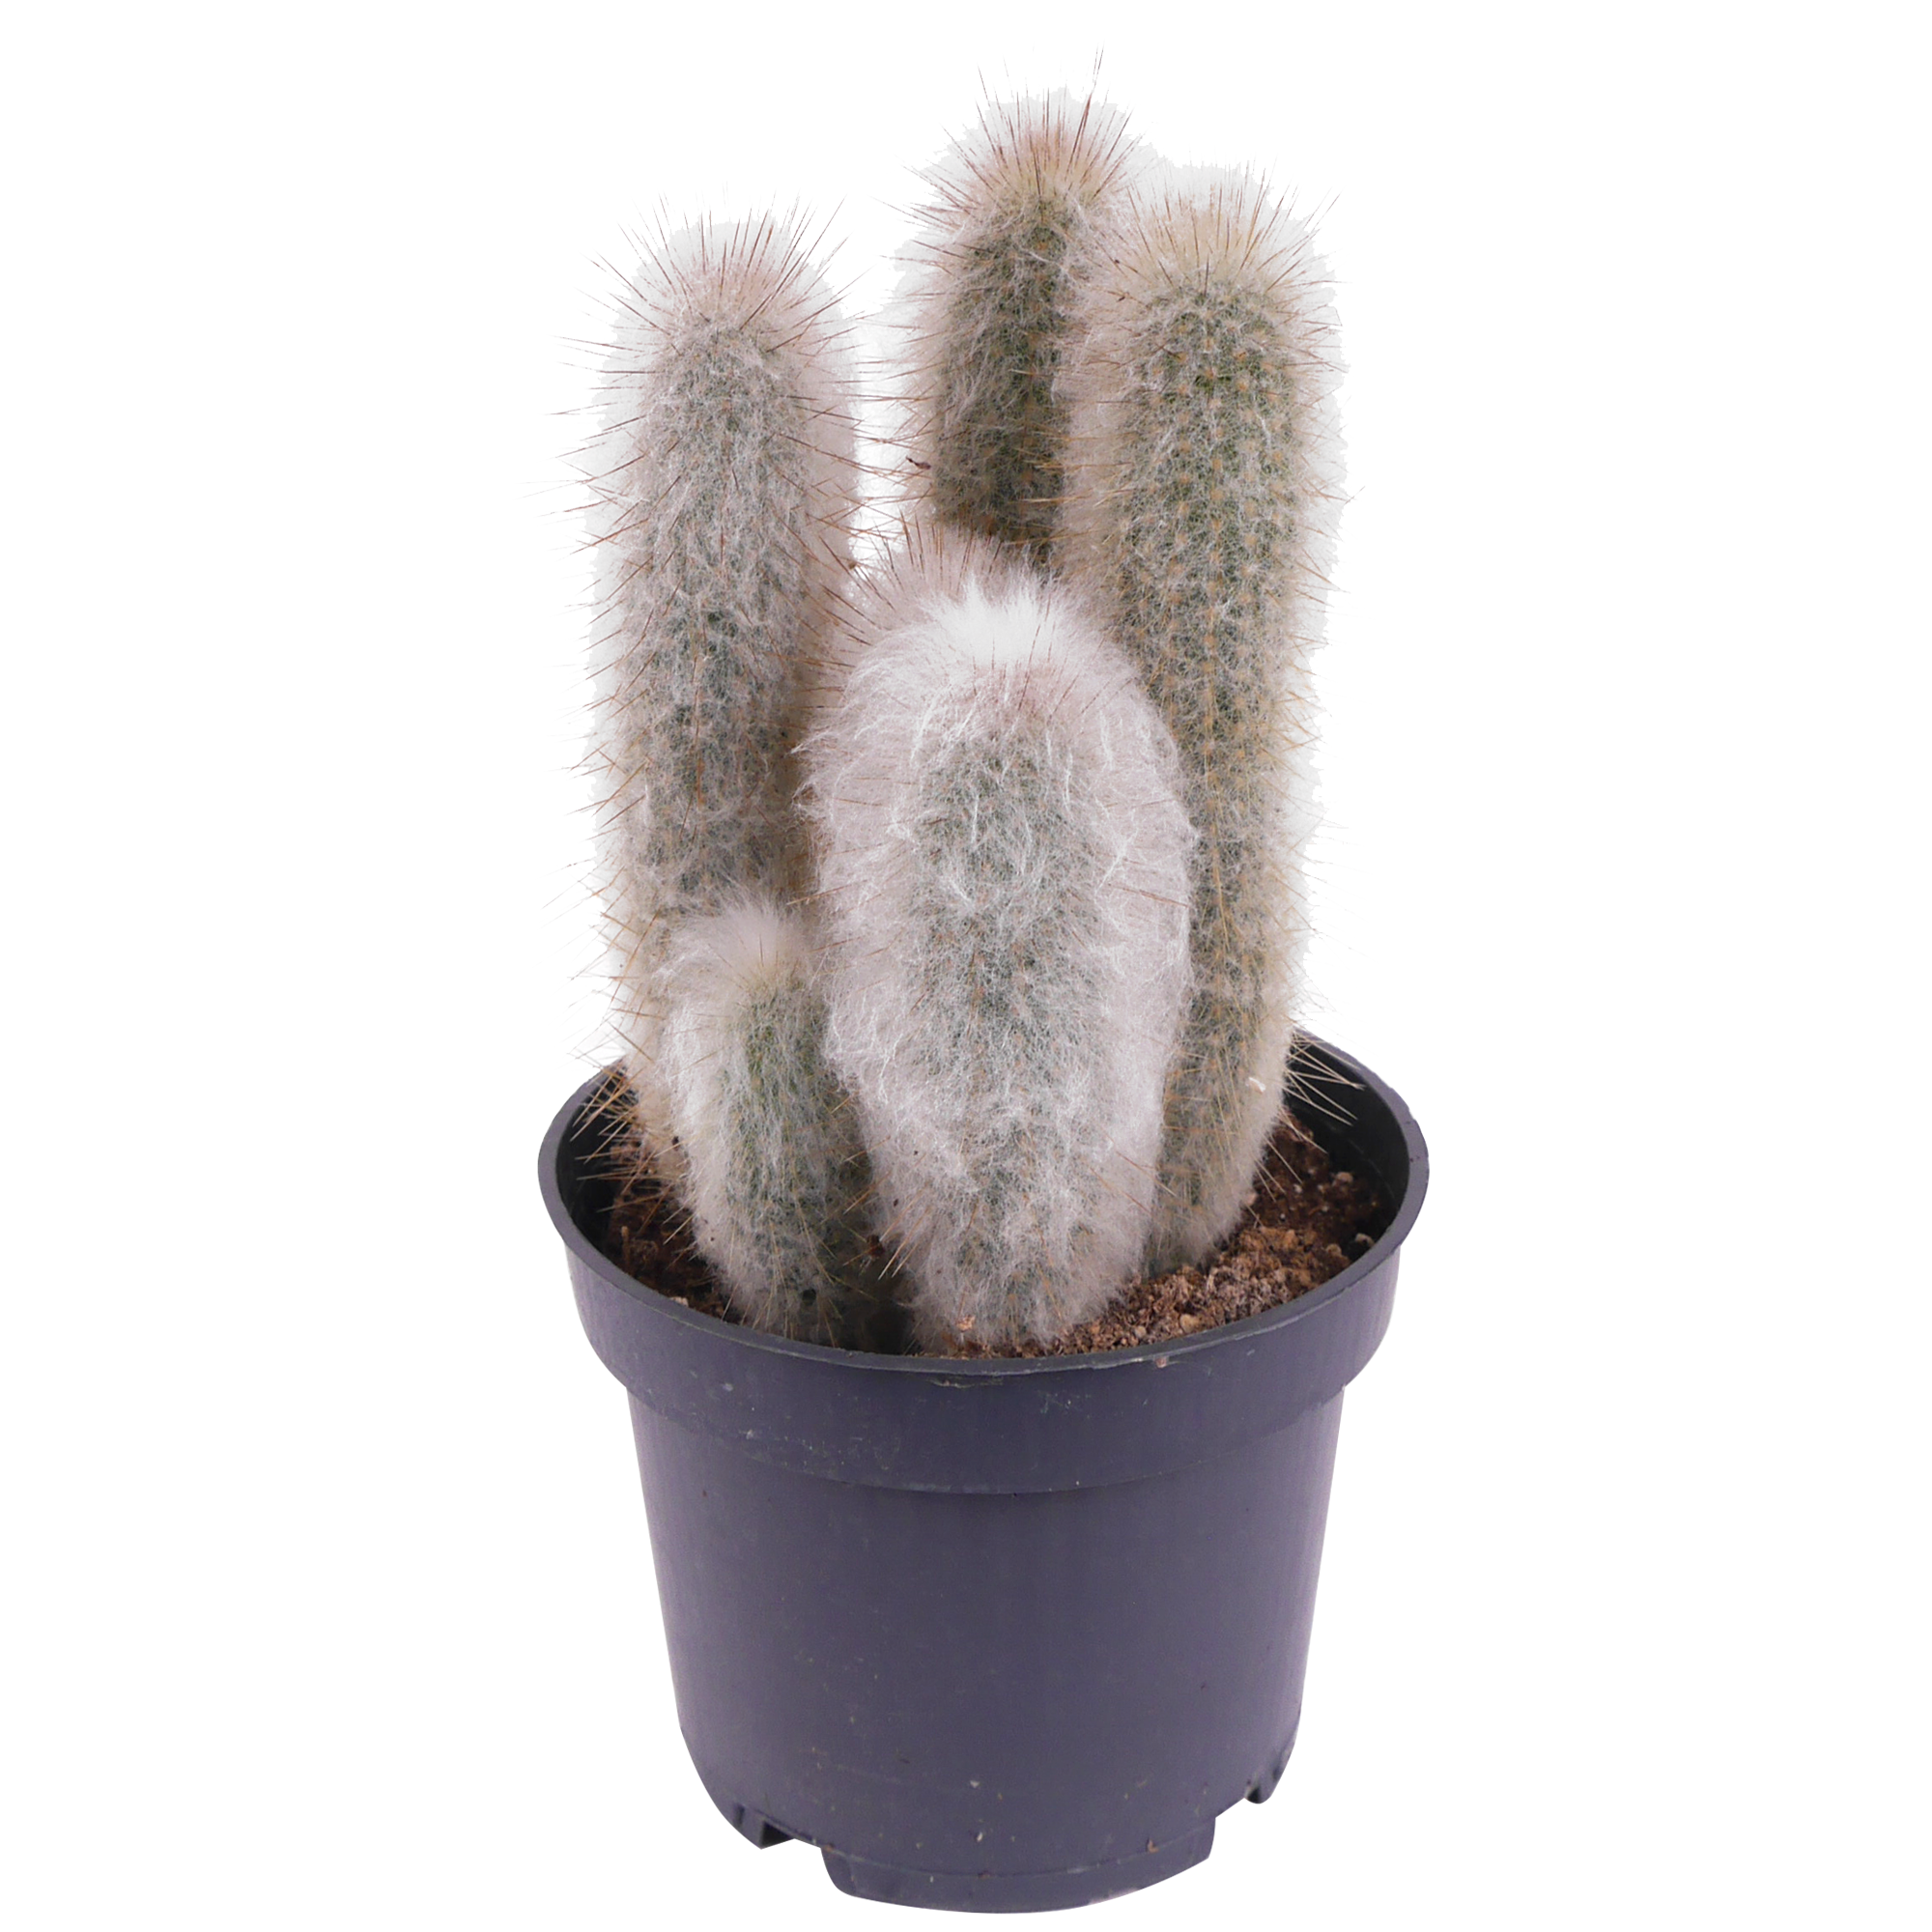 Kaktus 12 cm Topf + product picture